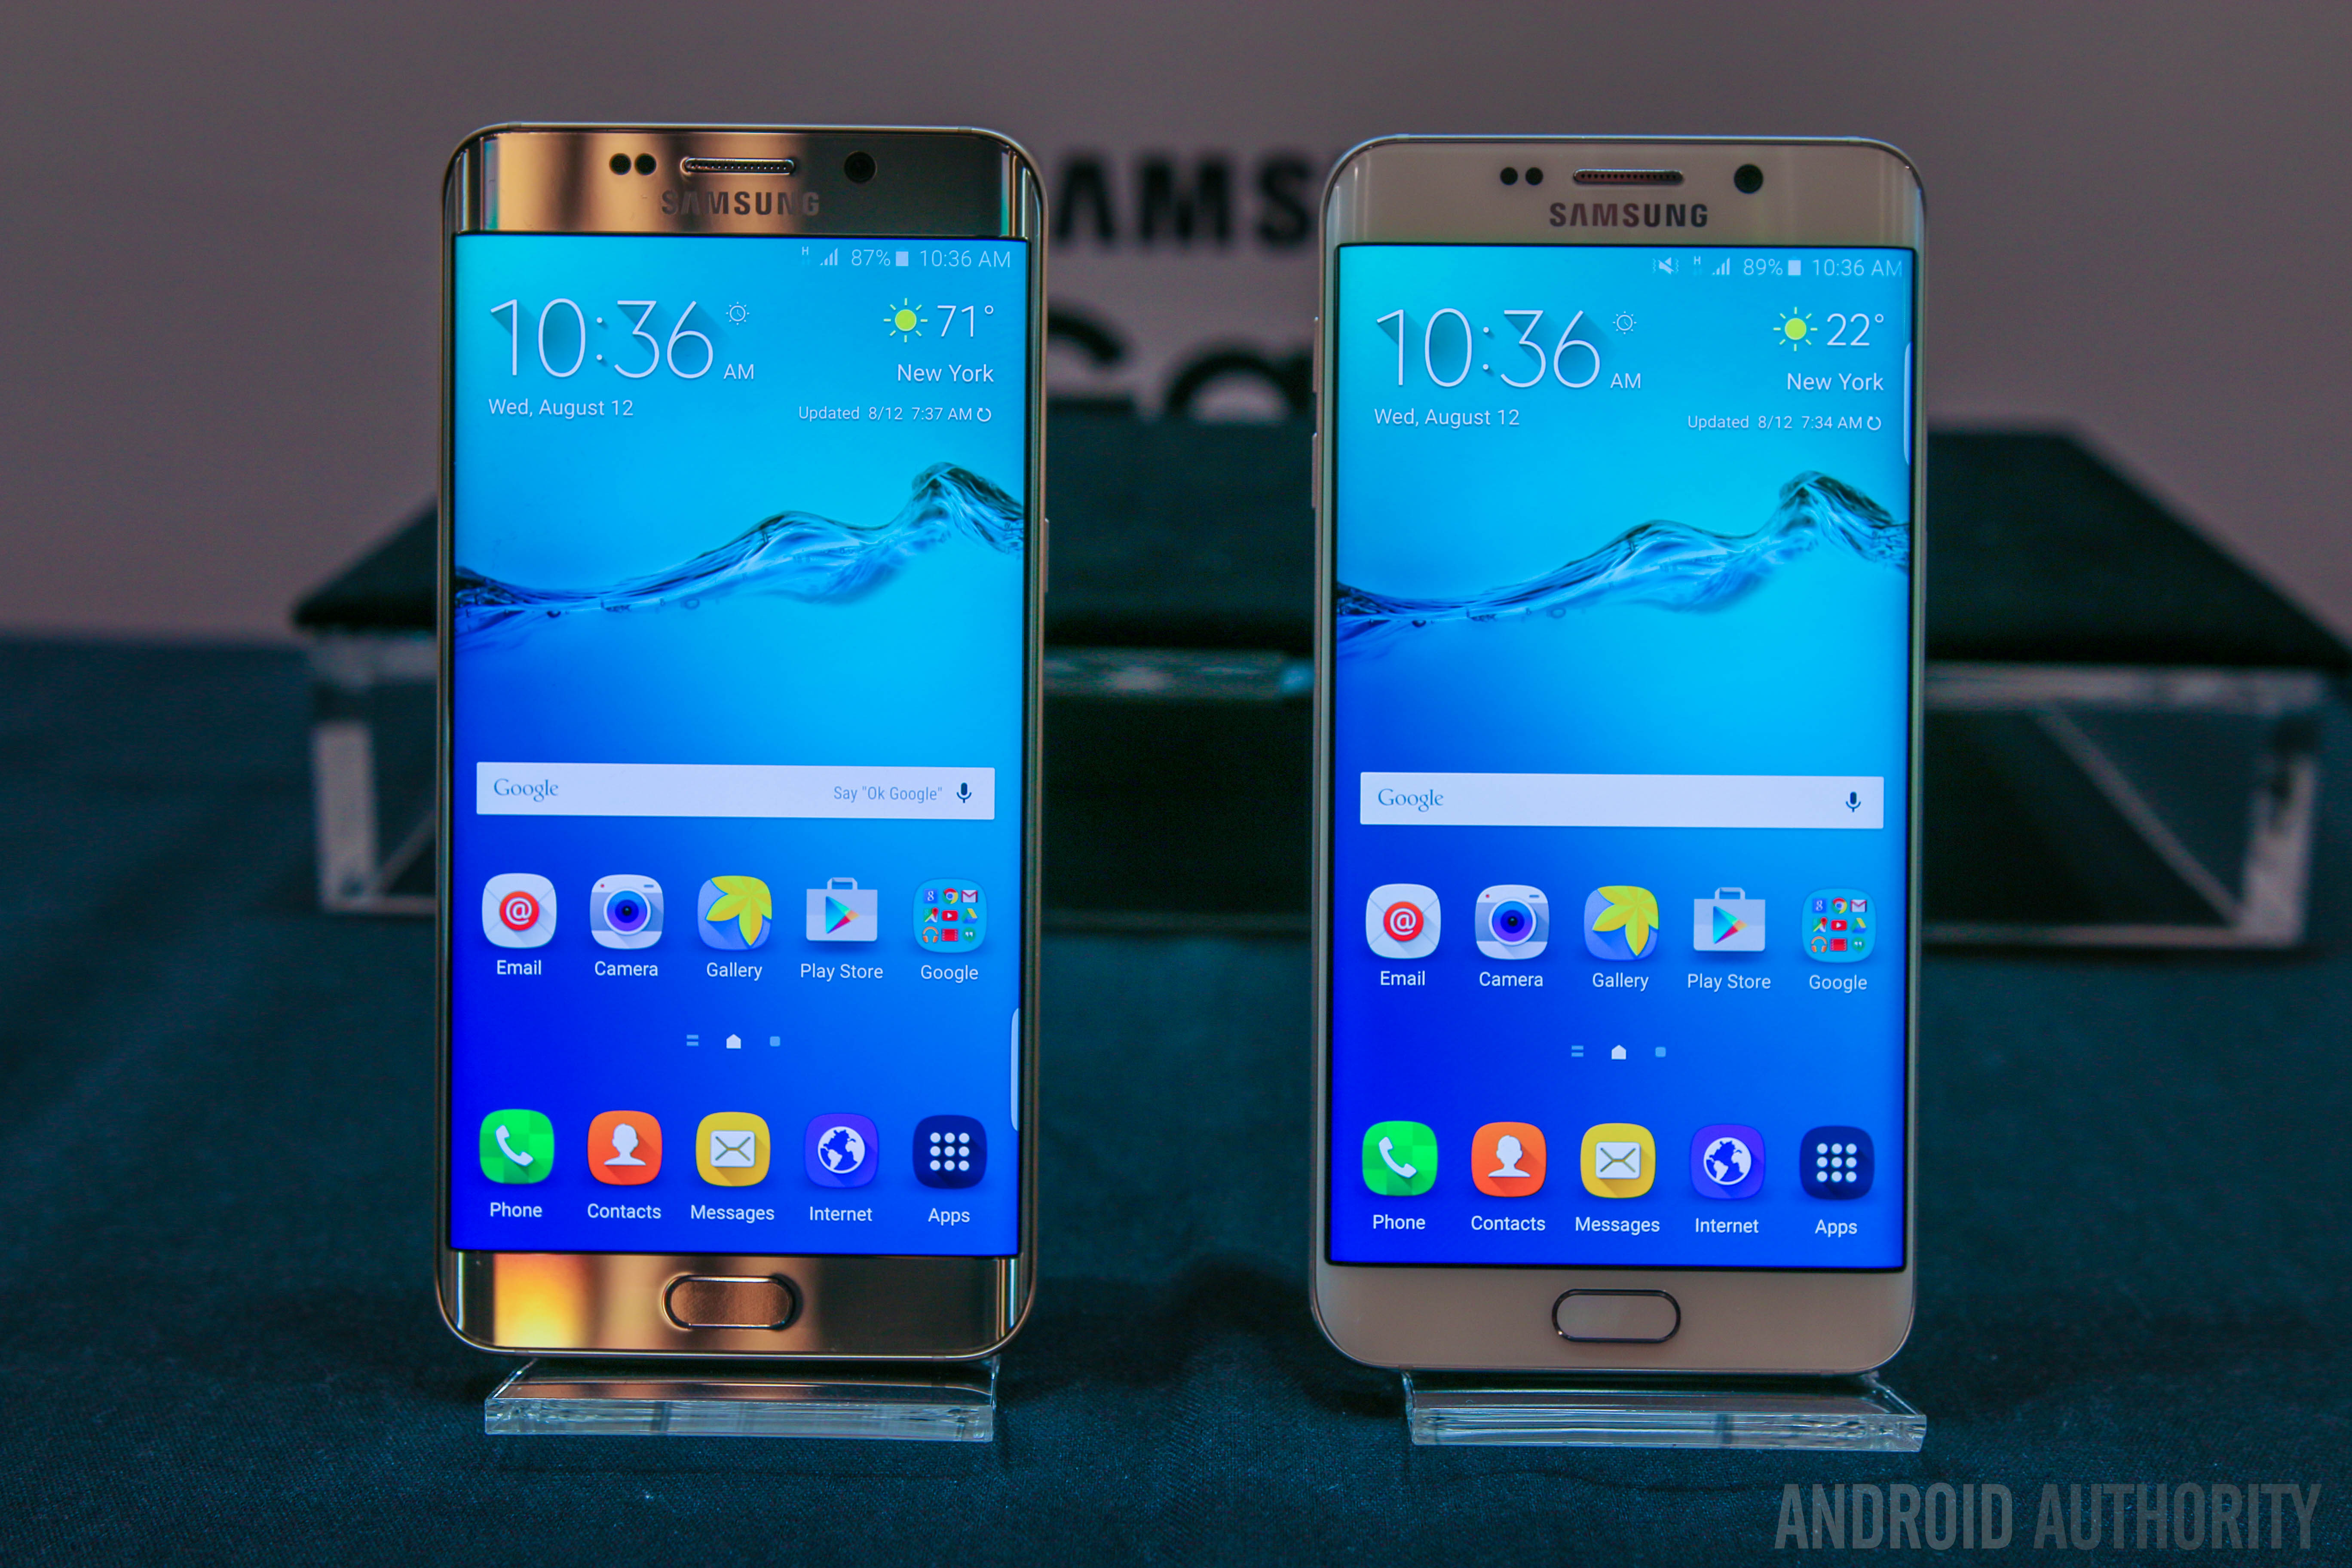 Samsung Galaxy S6 Edge Plus Hands On-30